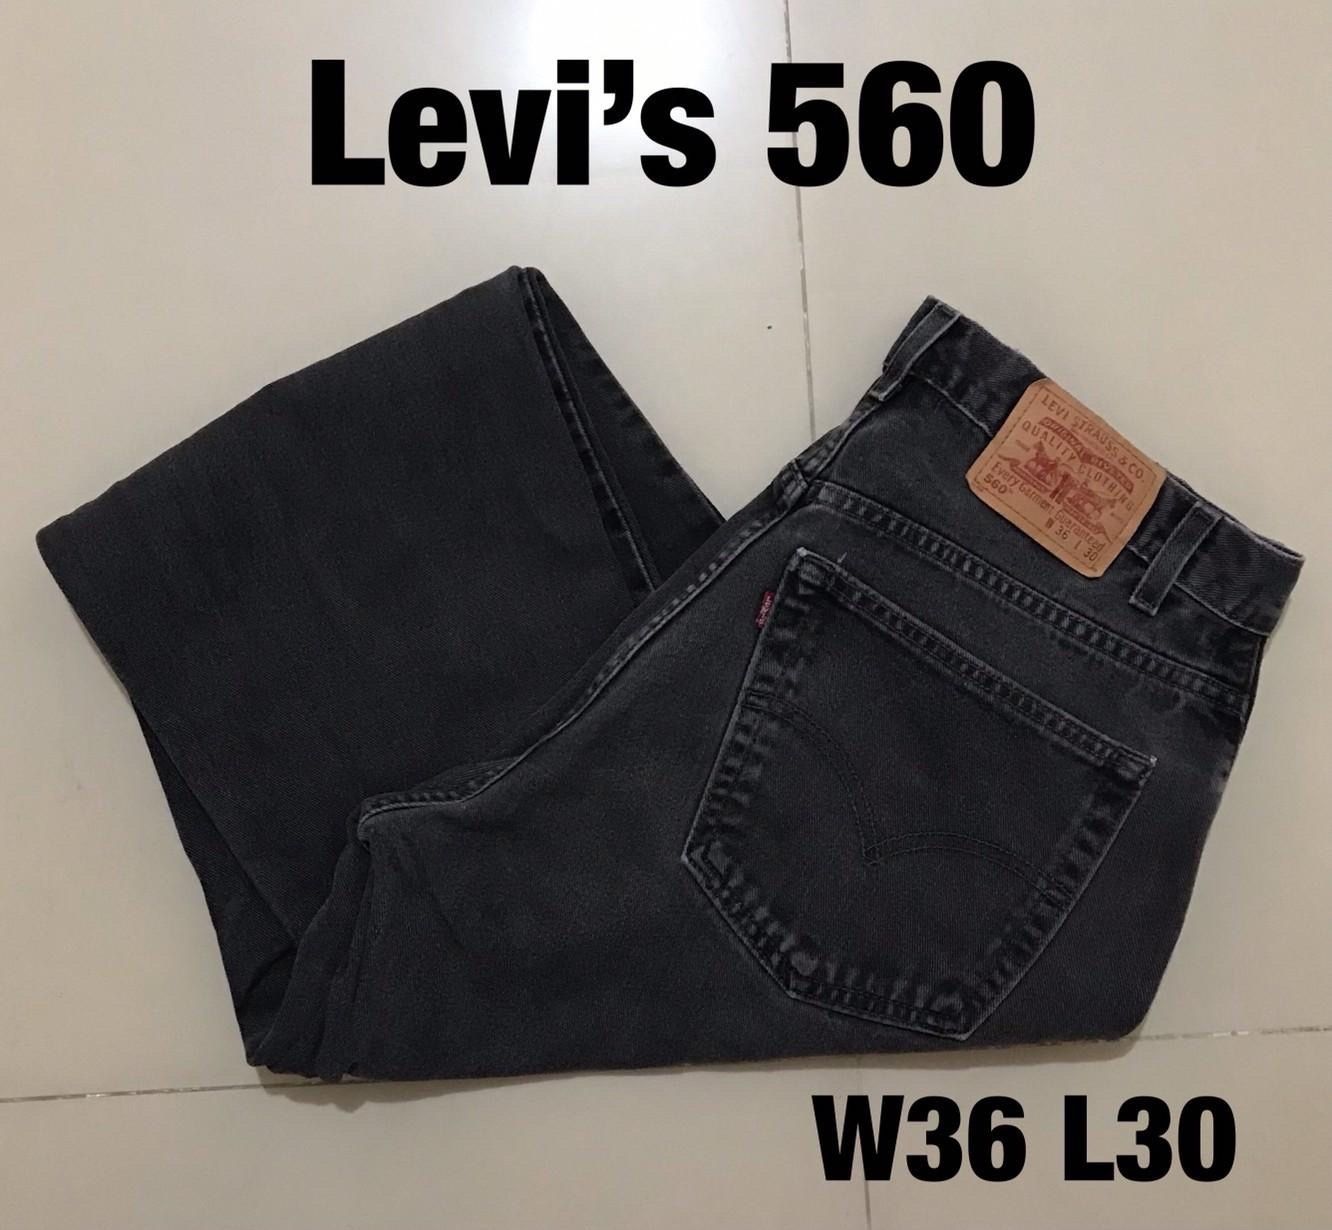 T301【Levi's 560 BLACK】W36 L30 ワイド バギー 極太 内タグ無 生産国